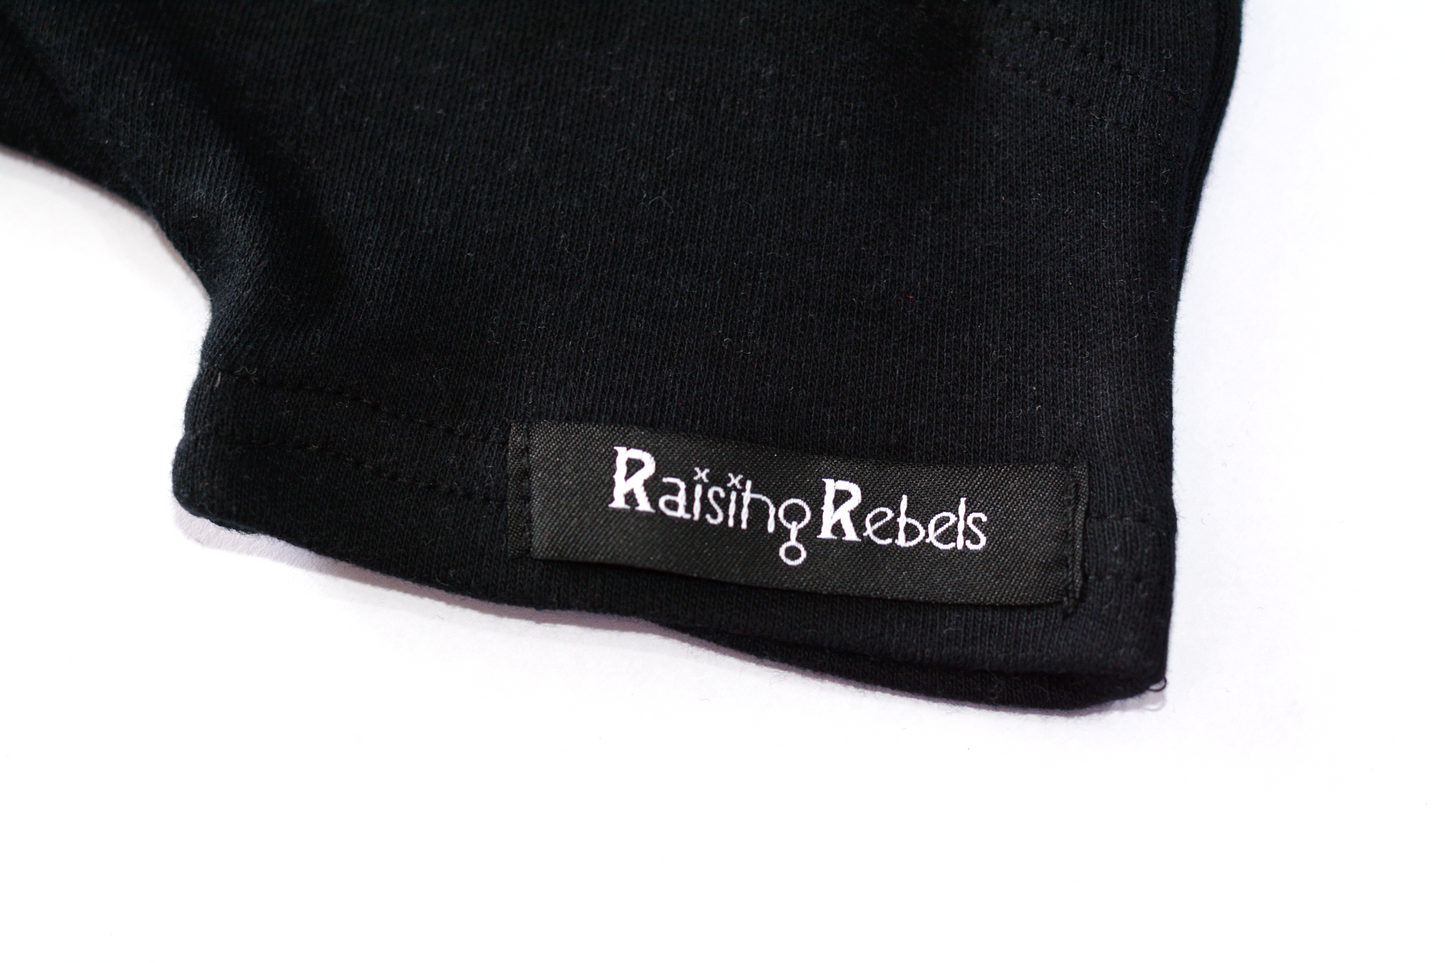 Raising Rebels Logo on Black Baby Shorts